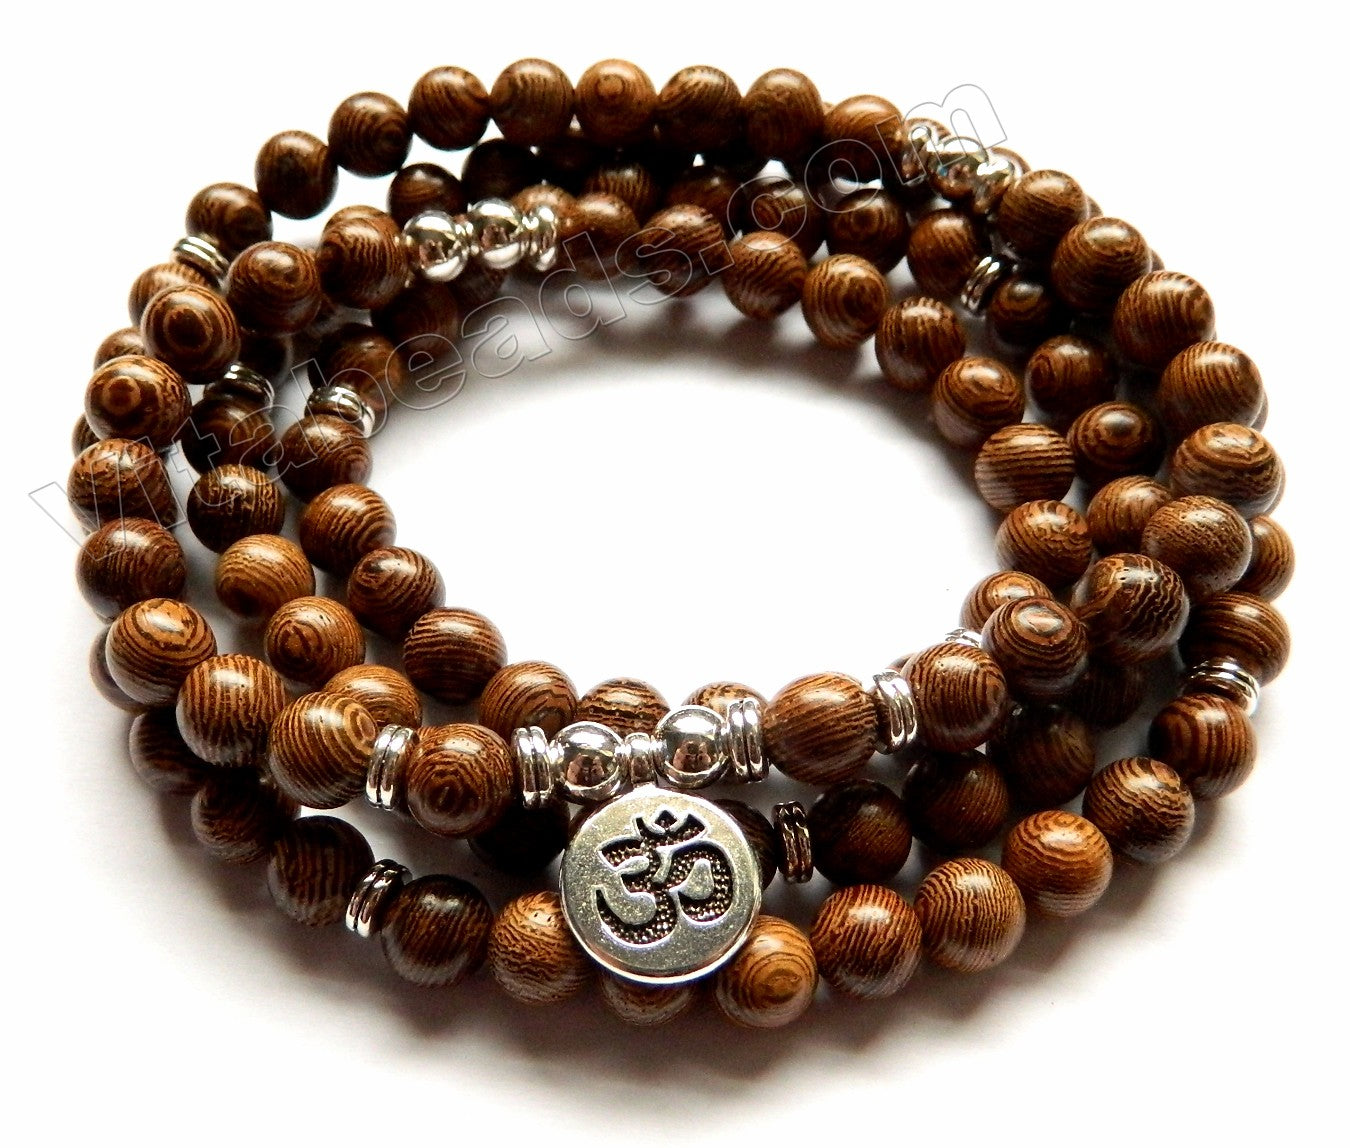 Sandal Wood  -  109 Mala Beads Bracelet, Necklace  38"   w/ "Namaste" Coin Charm